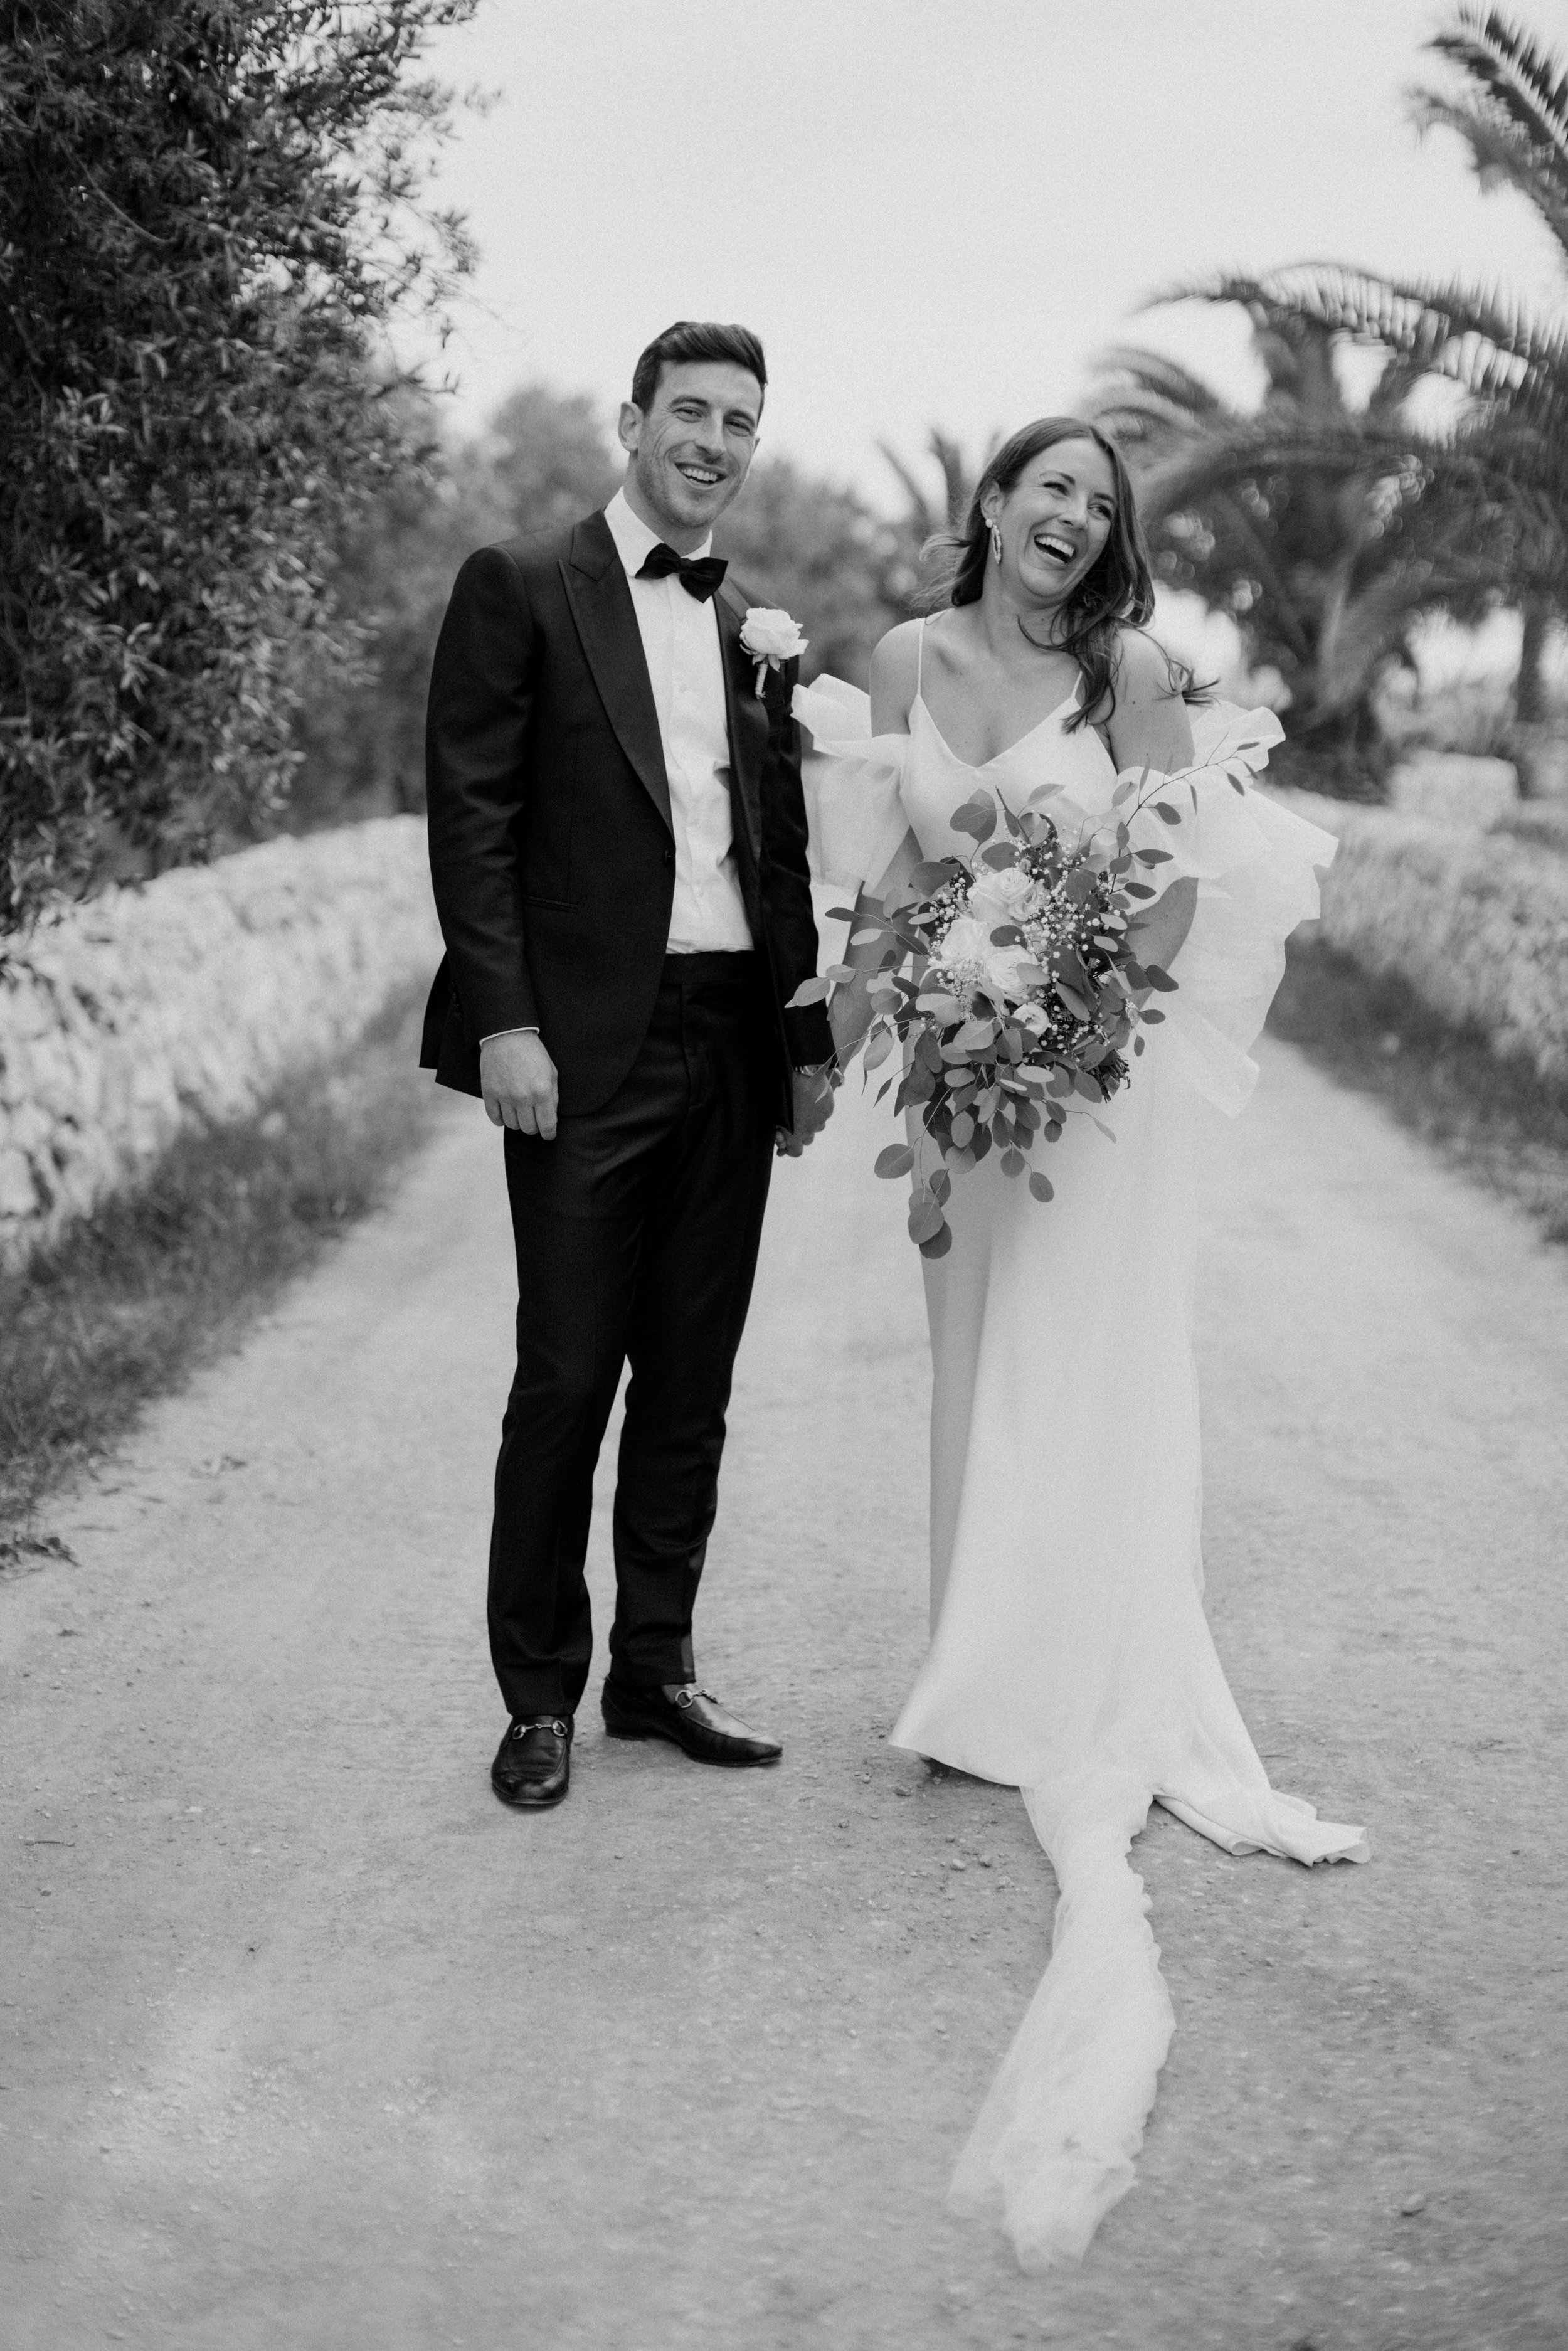 Beautiful bride Kathryn wore the Iris slip and Issa shrug | Wedding dress by Halfpenny London